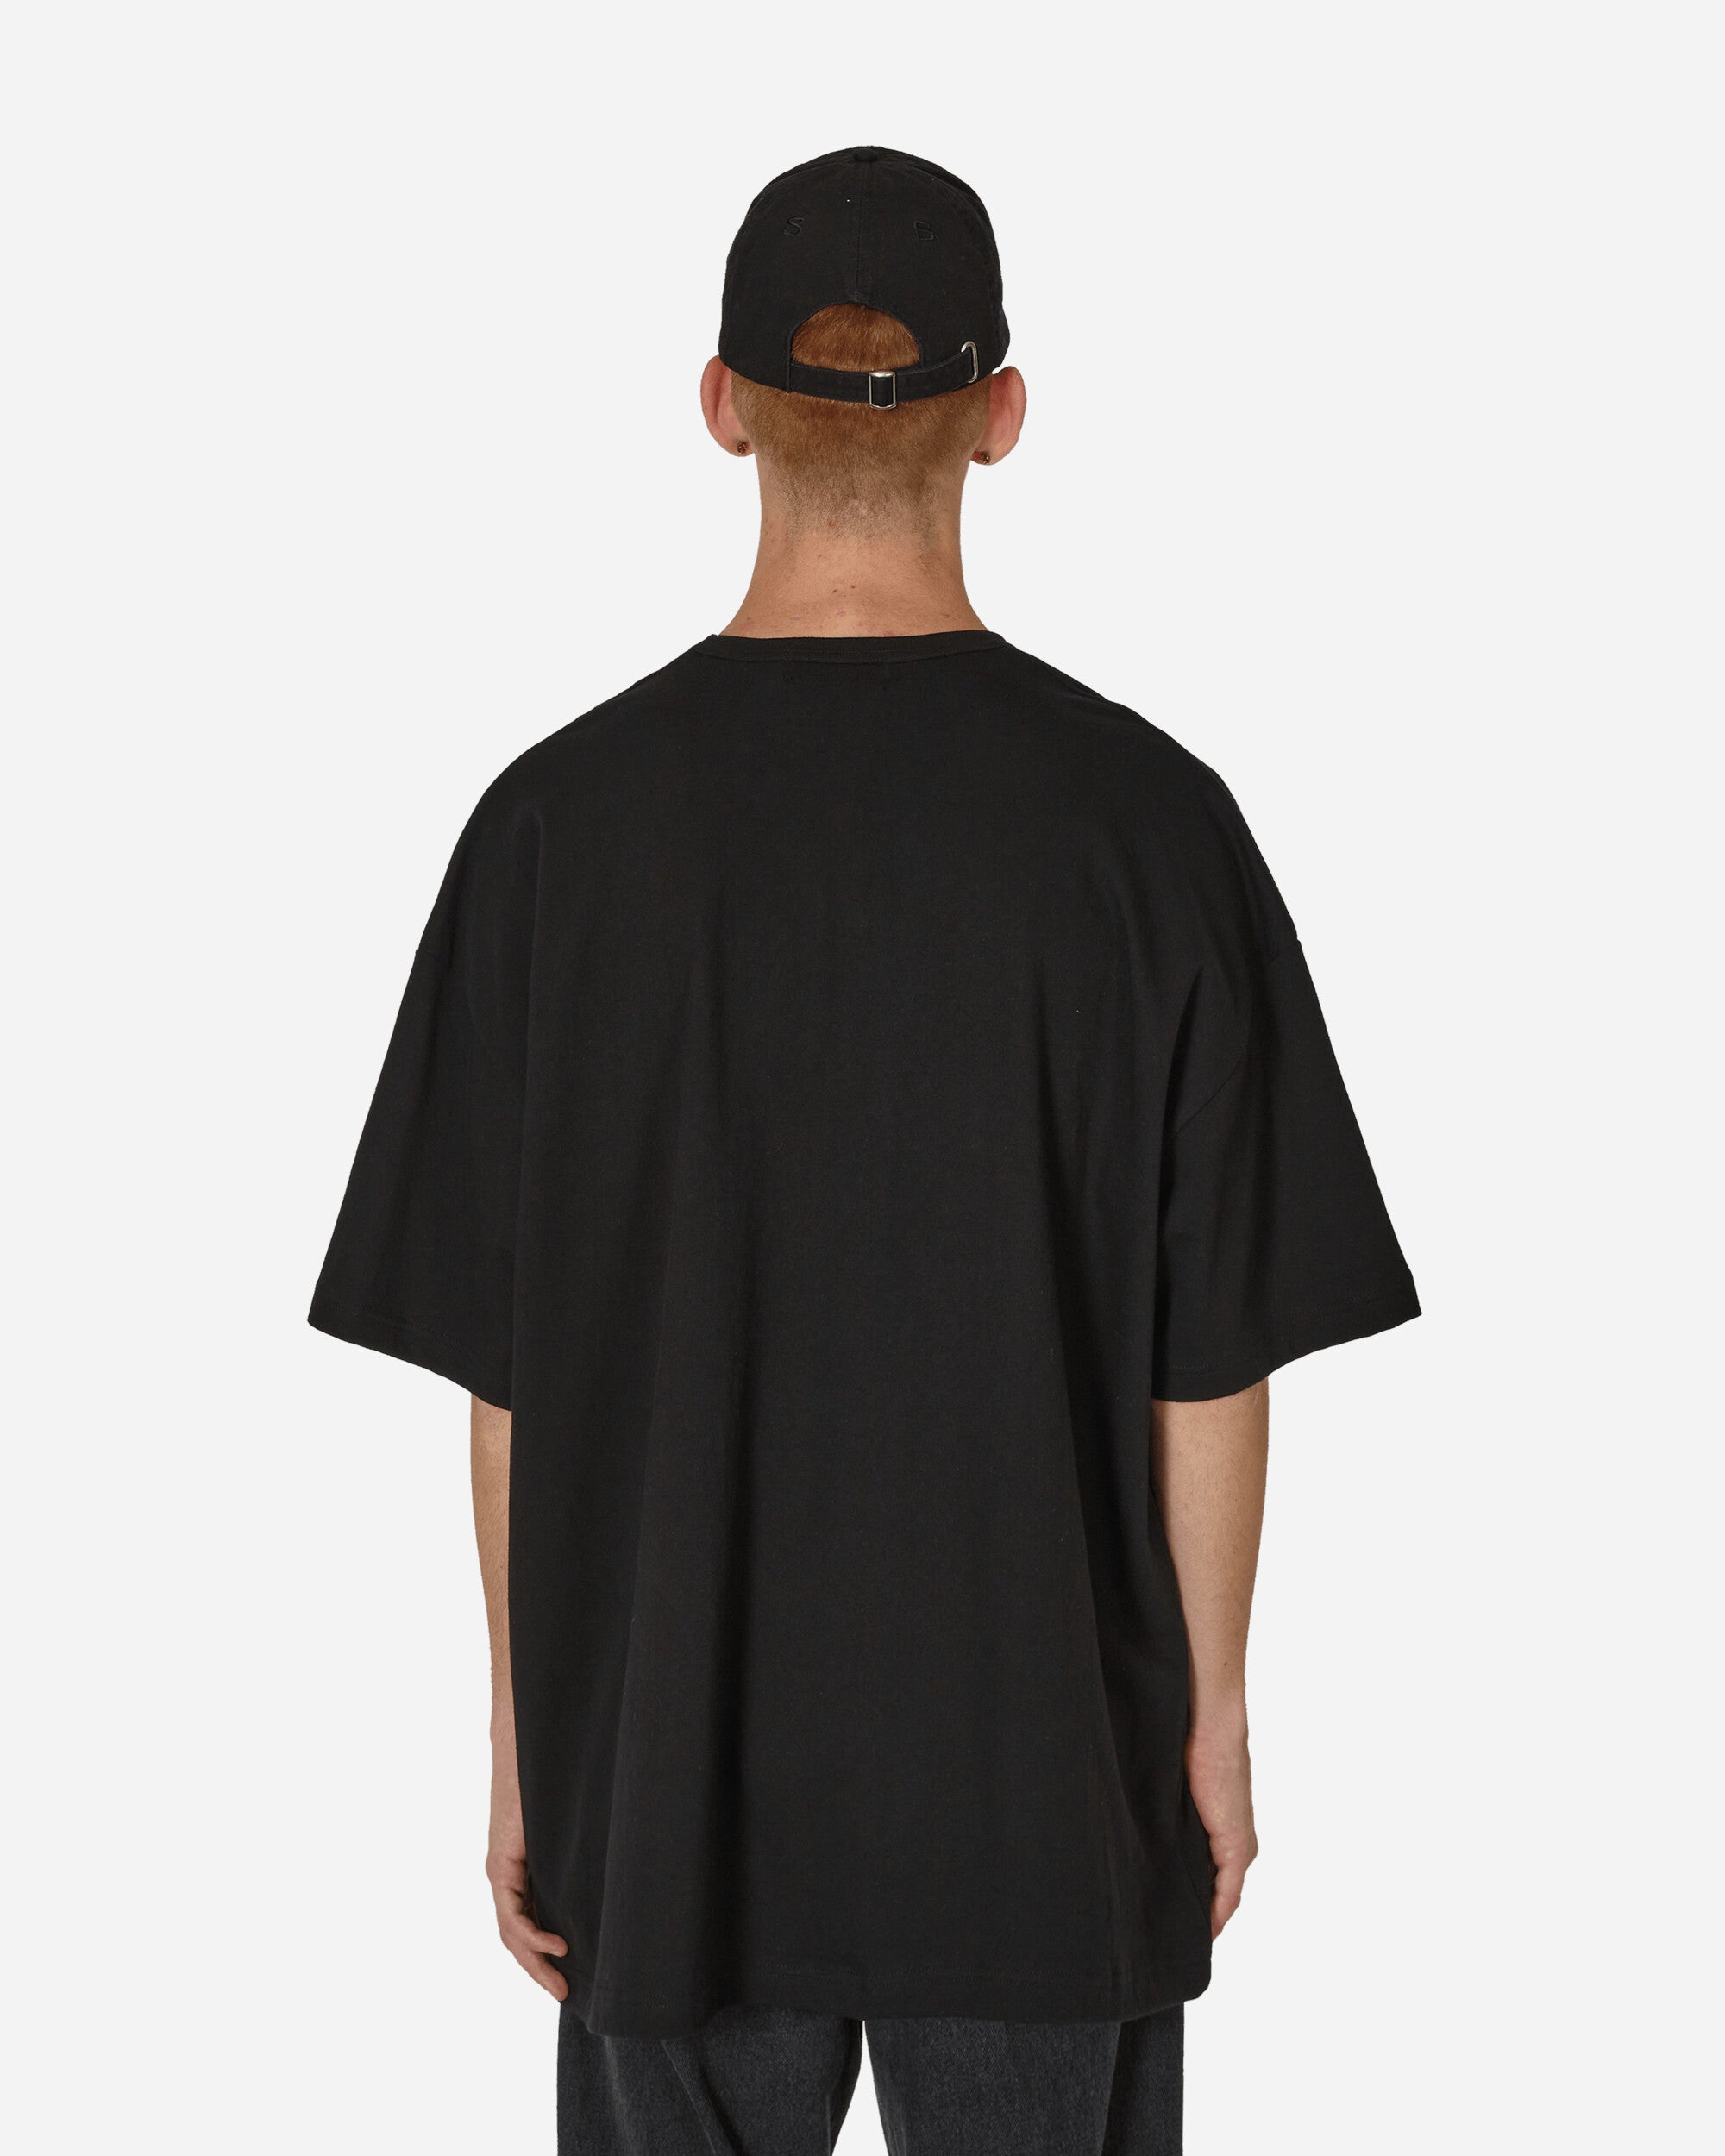 Comme Des Garçons Black T-Shirt Black T-Shirts Shortsleeve 1L-T102-W23 1